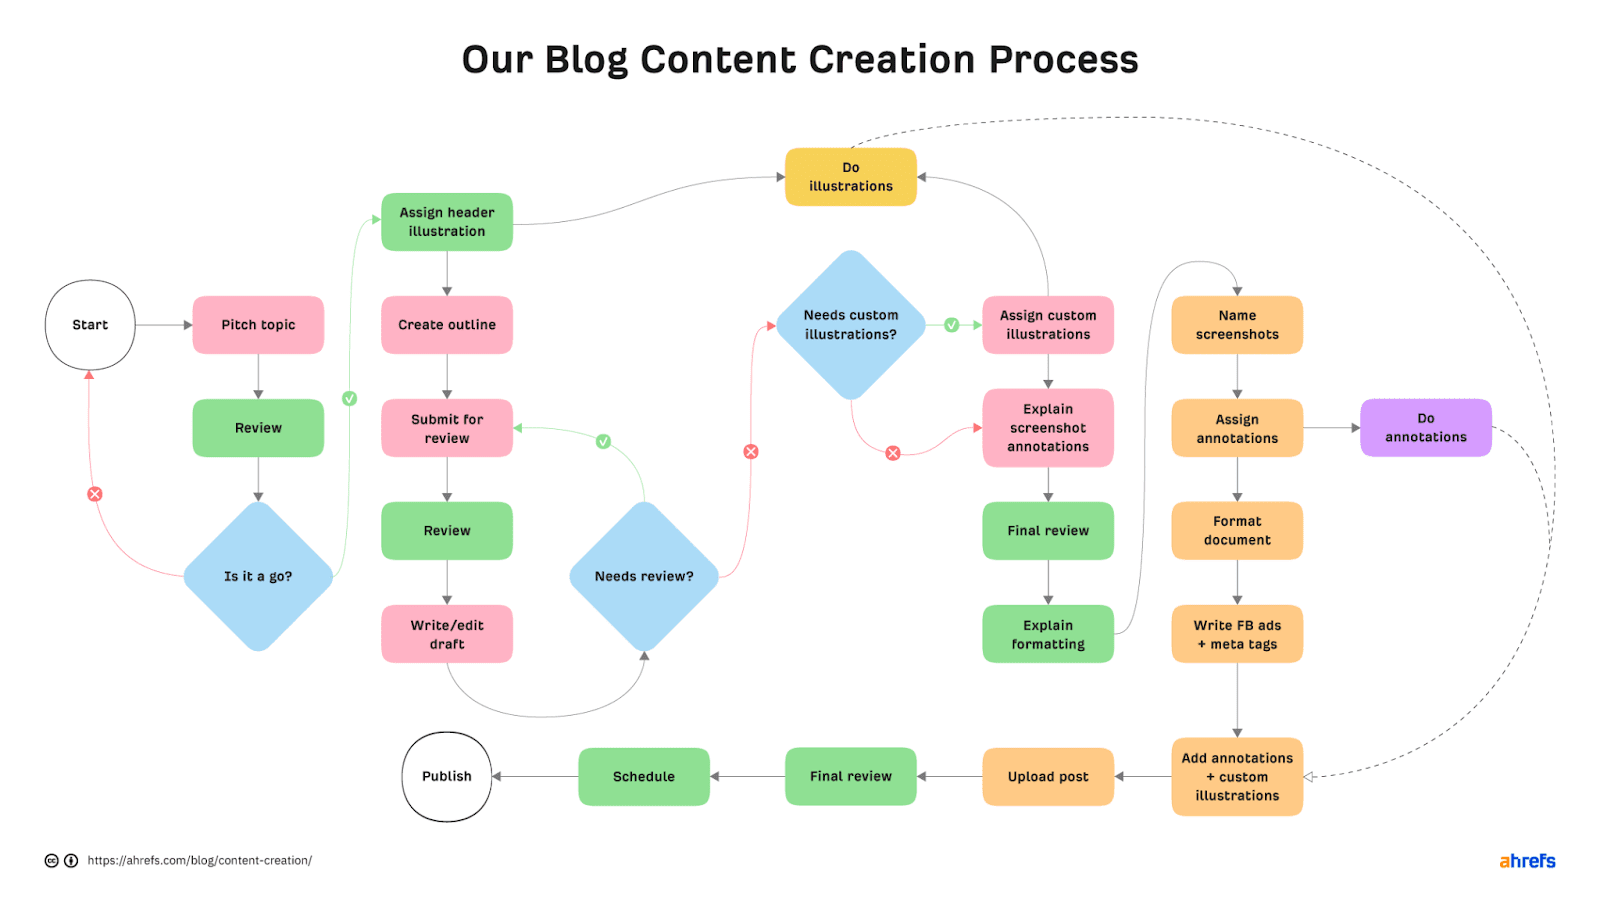 Ahrefs' chart on its blog creation process